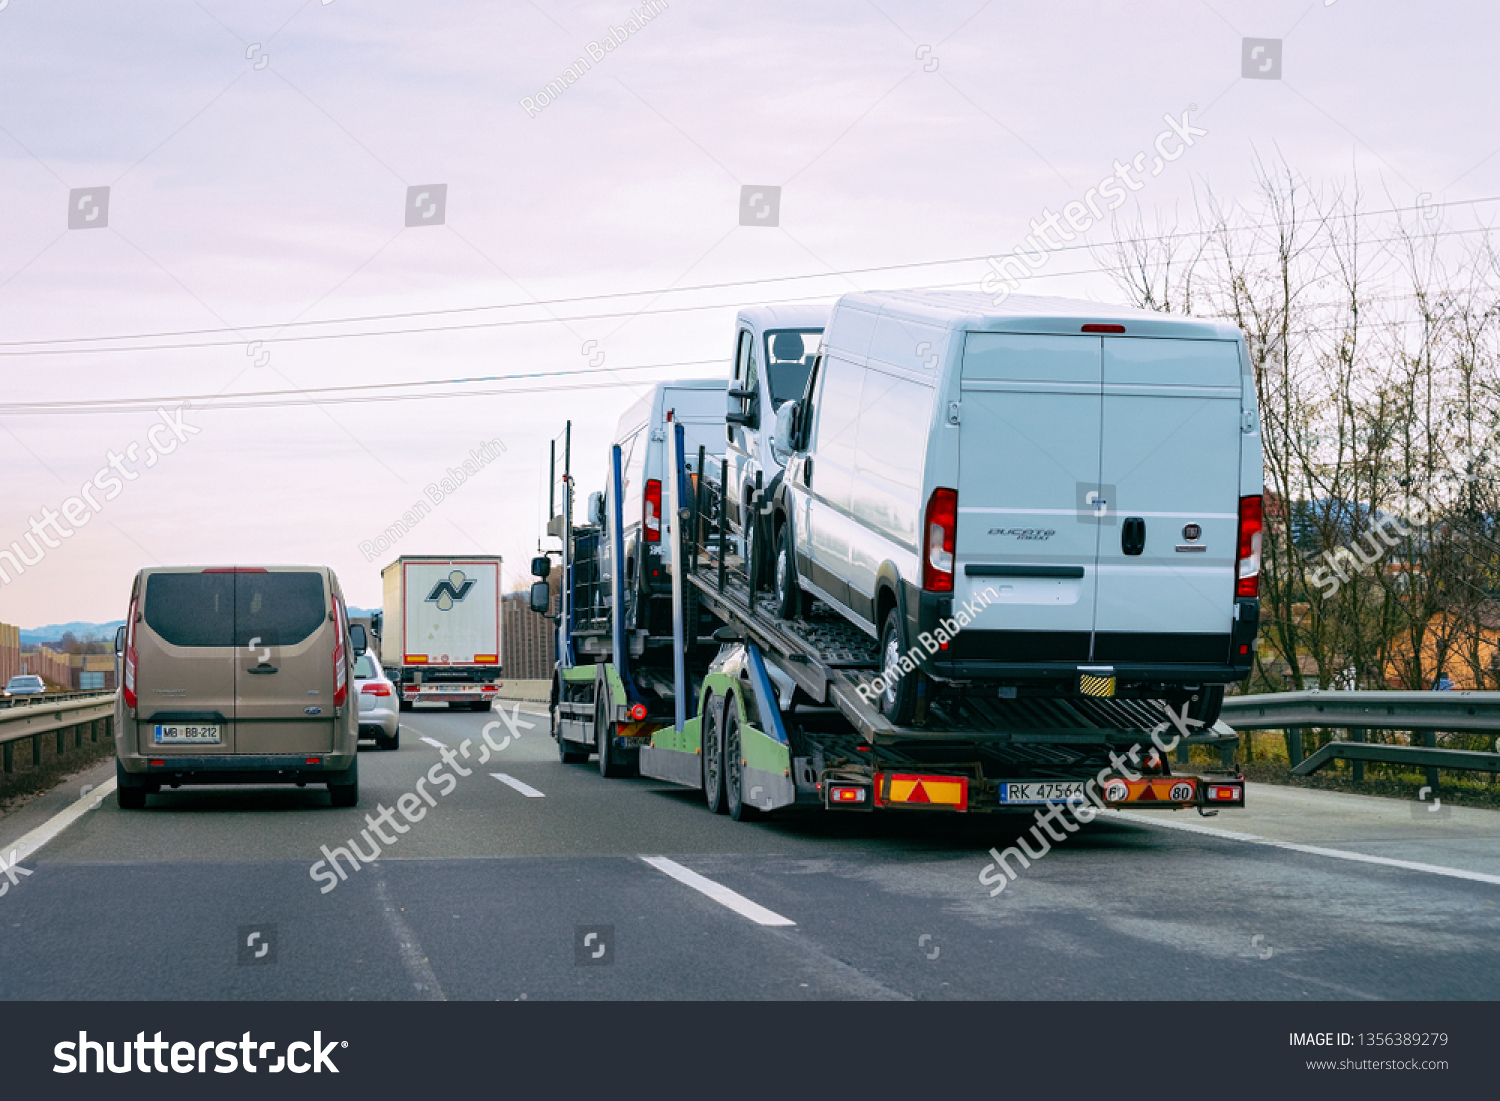 Ljubljana, Slovenia - January 16, 2019: Minivan carrier transporter truck in road. Auto vehicles hauler on driveway. European van transport logistics at haulage work transportation. Haul car trailer #1356389279